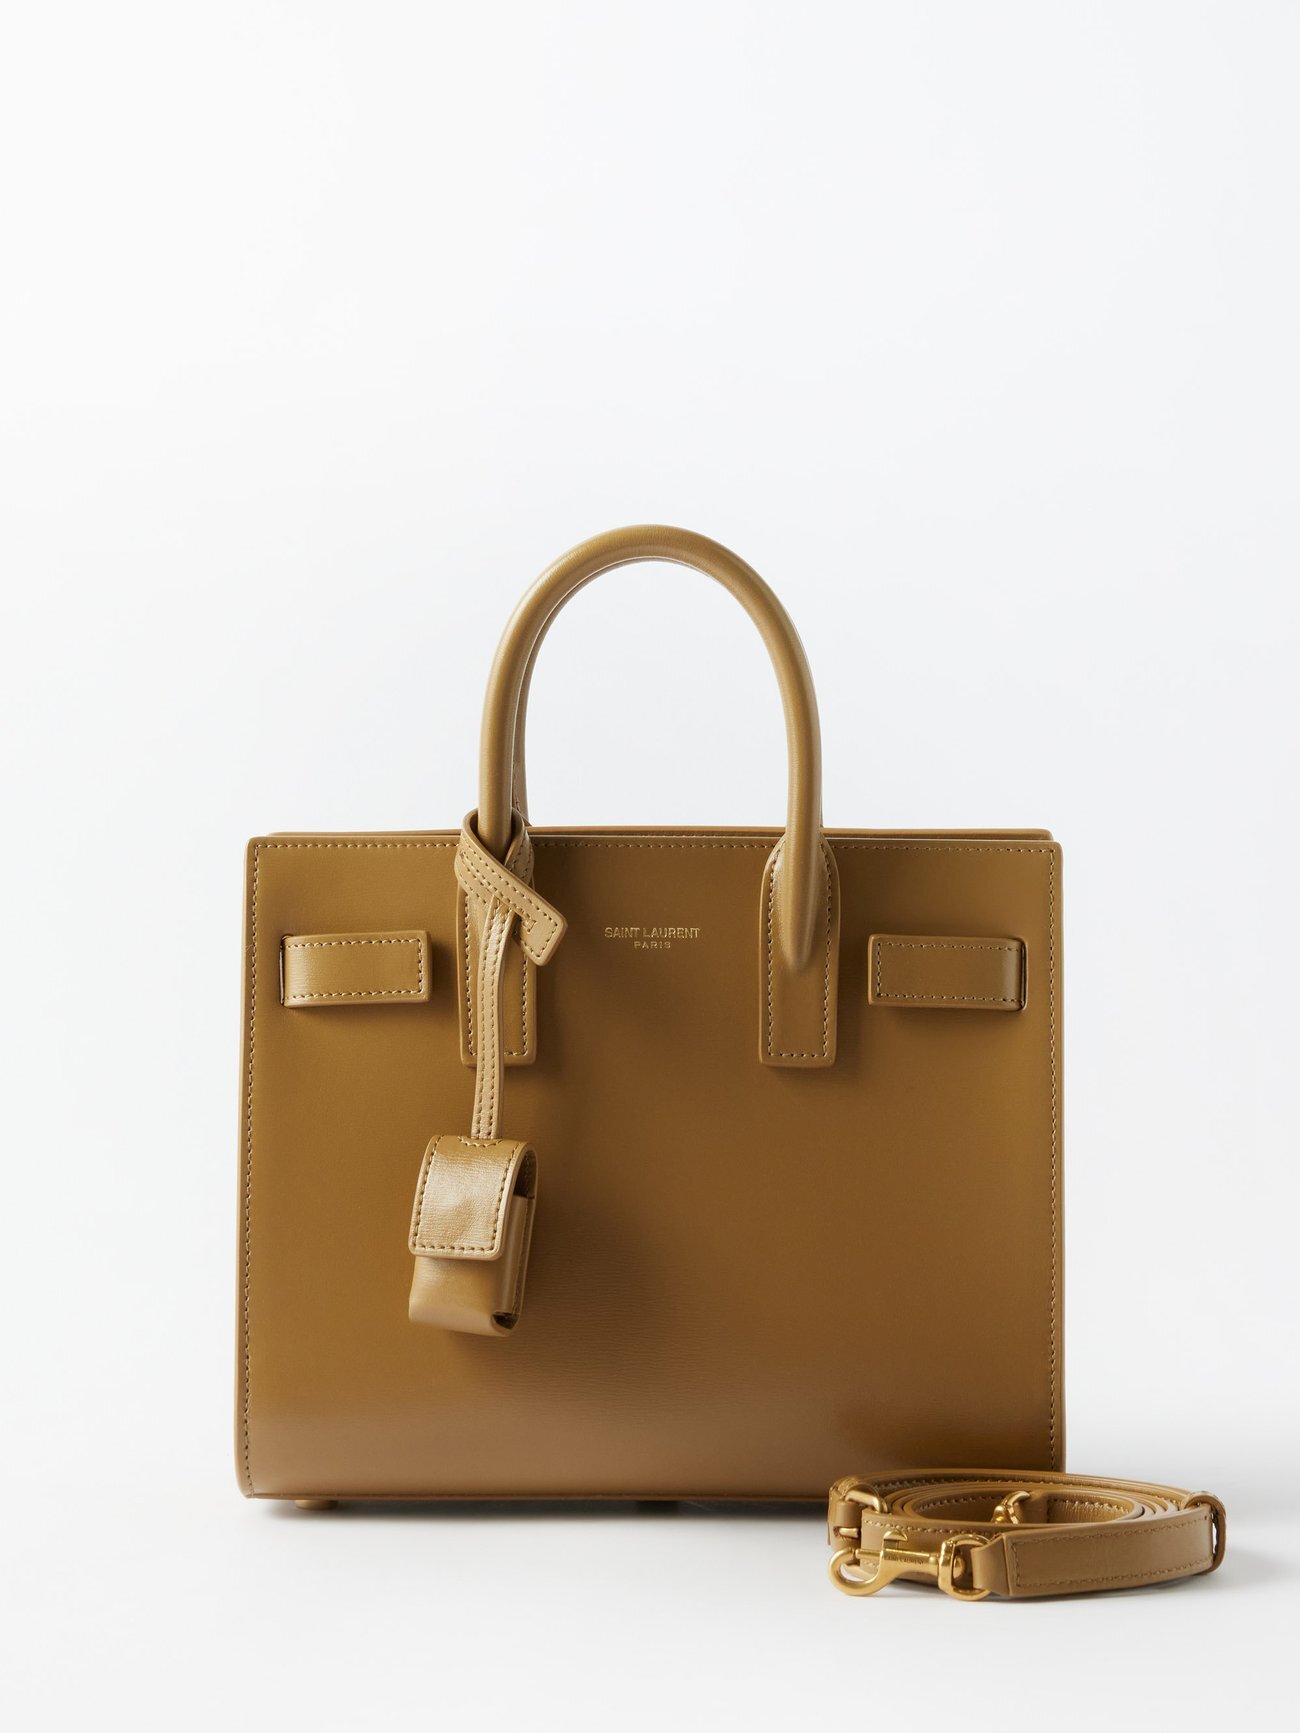 Saint Laurent - Sac De Jour Nano Leather Handbag - Womens - Tan